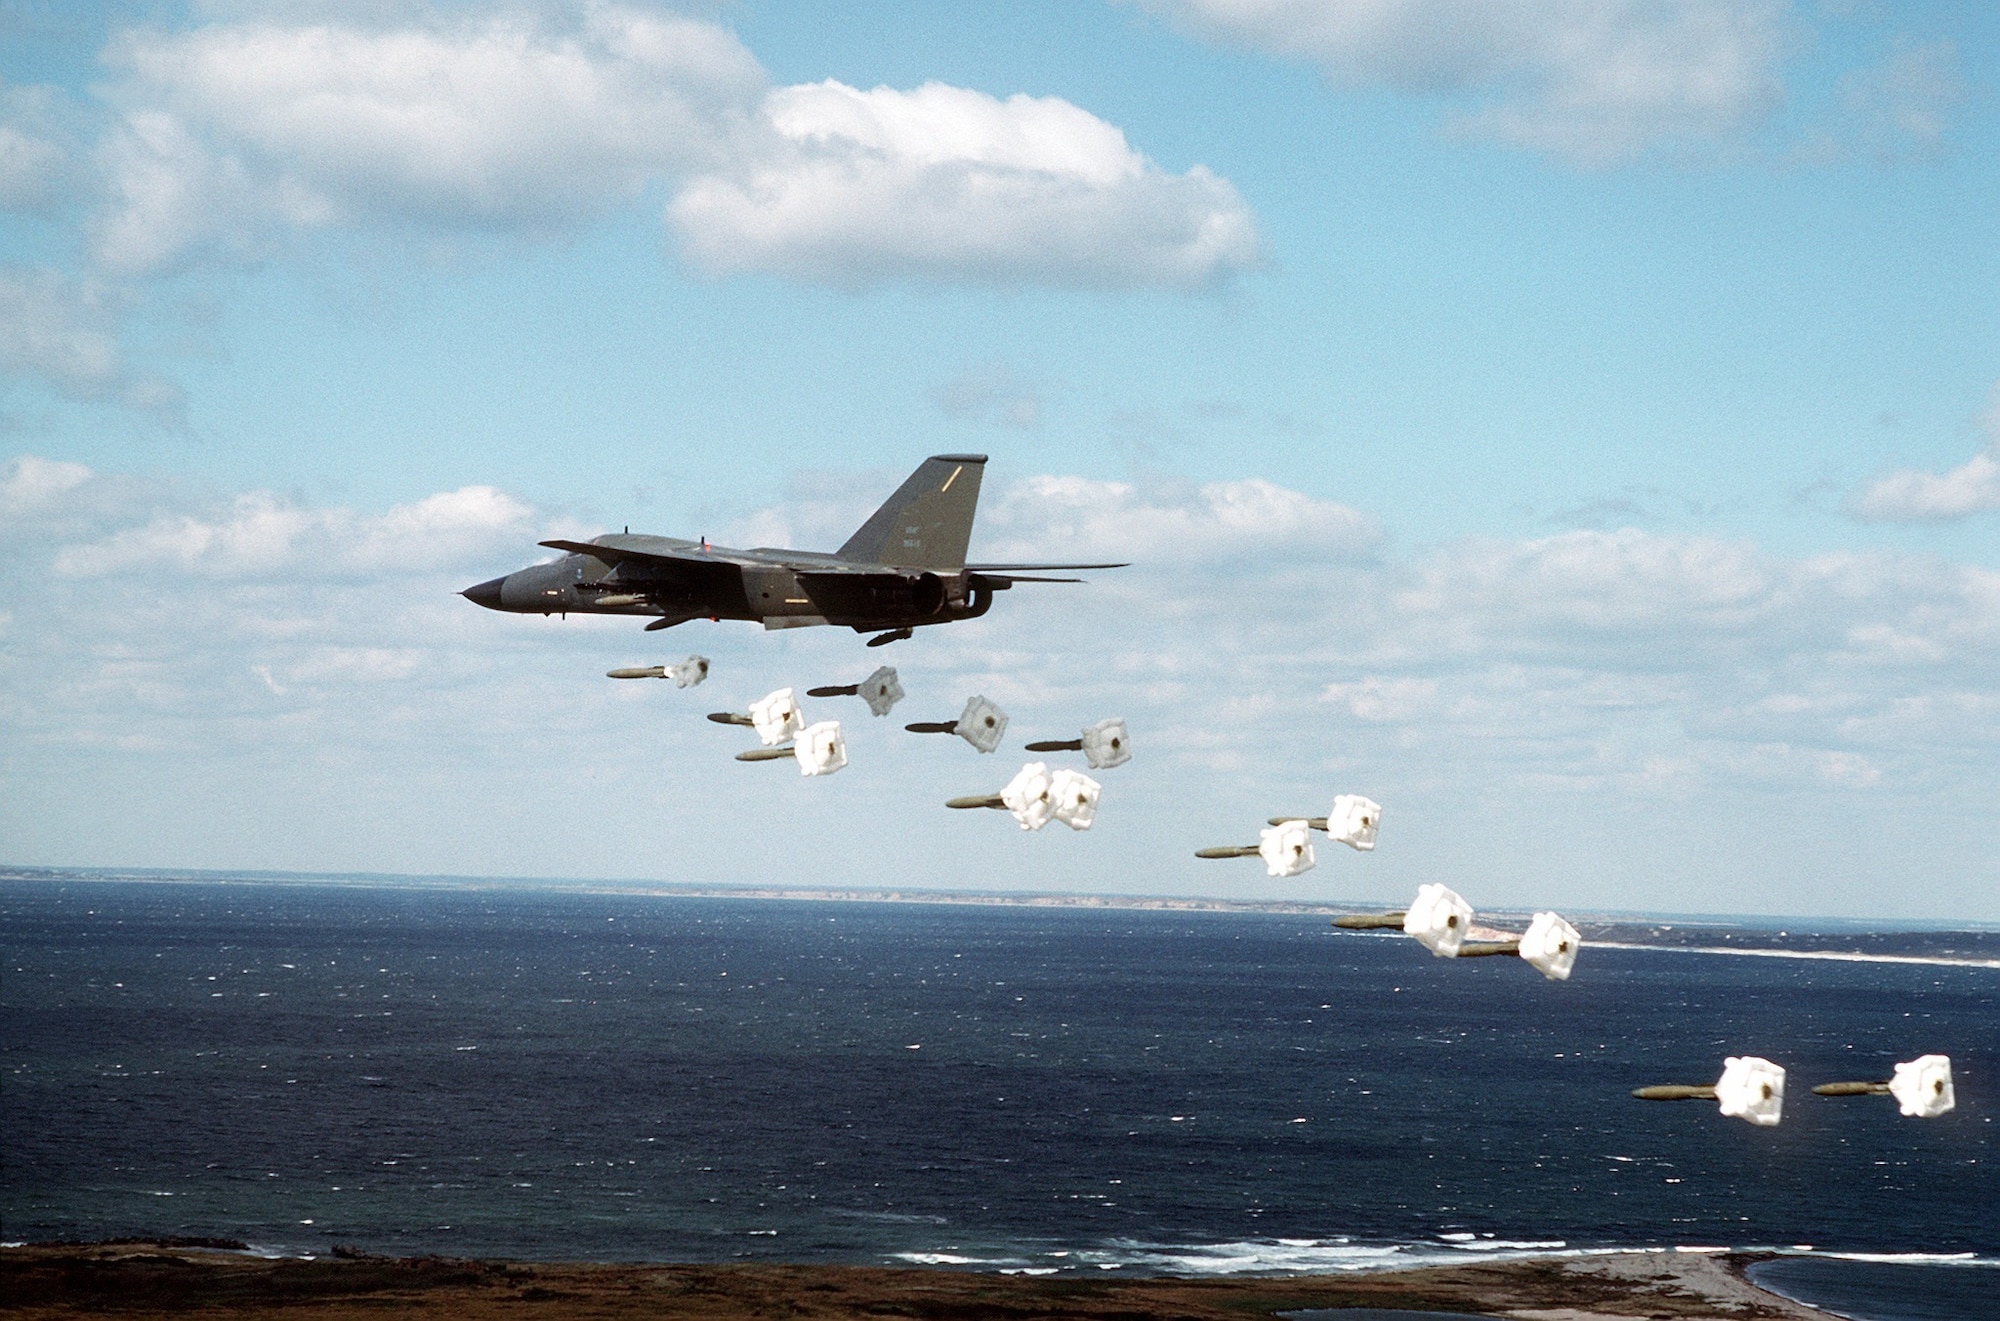 F-111 Aardvark flies over the coast